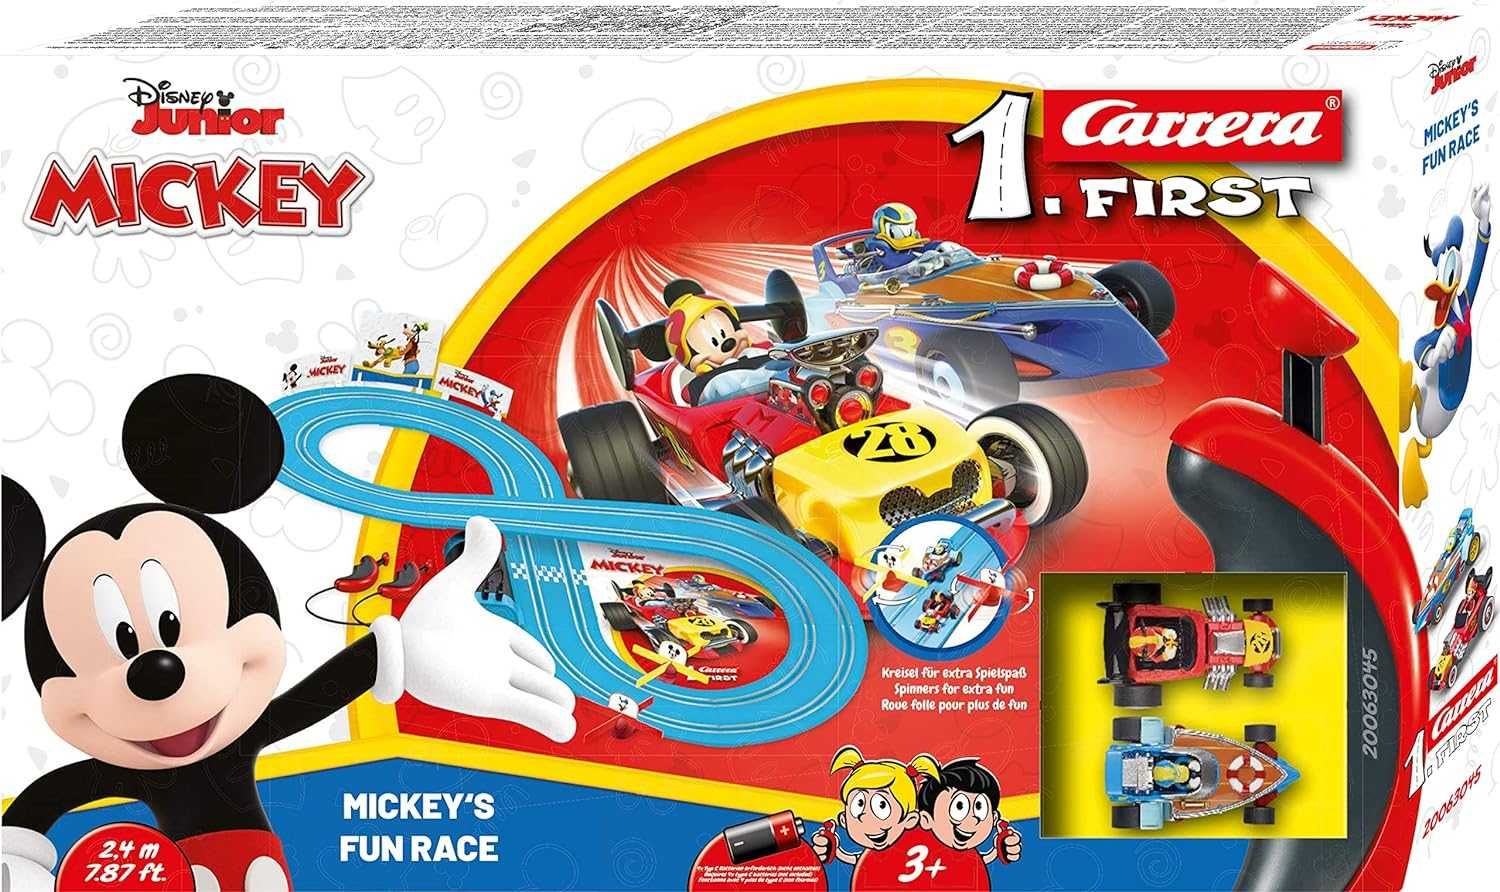 Carrera FIRST Mickey's Fun Race - състезателна писта за слот коли